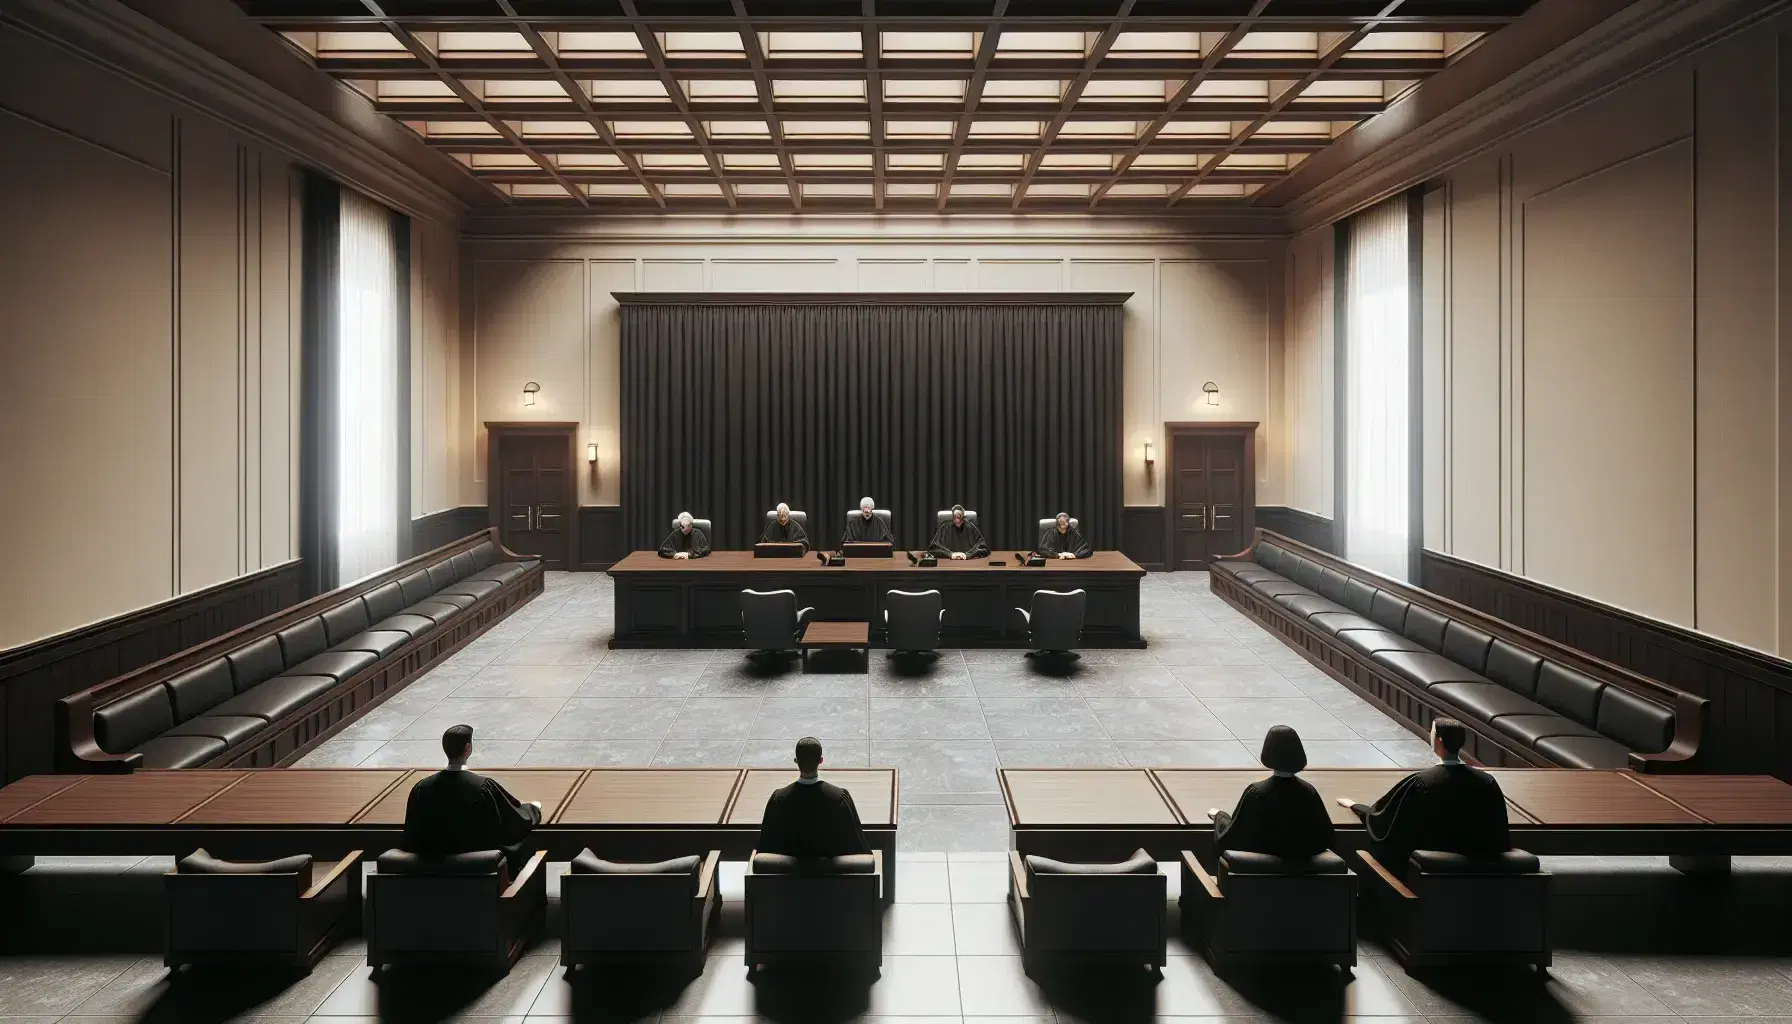 Sala de audiencias de un tribunal con mesa central para juez, dos mesas para abogados y bancos de madera para público, iluminada por luz natural.